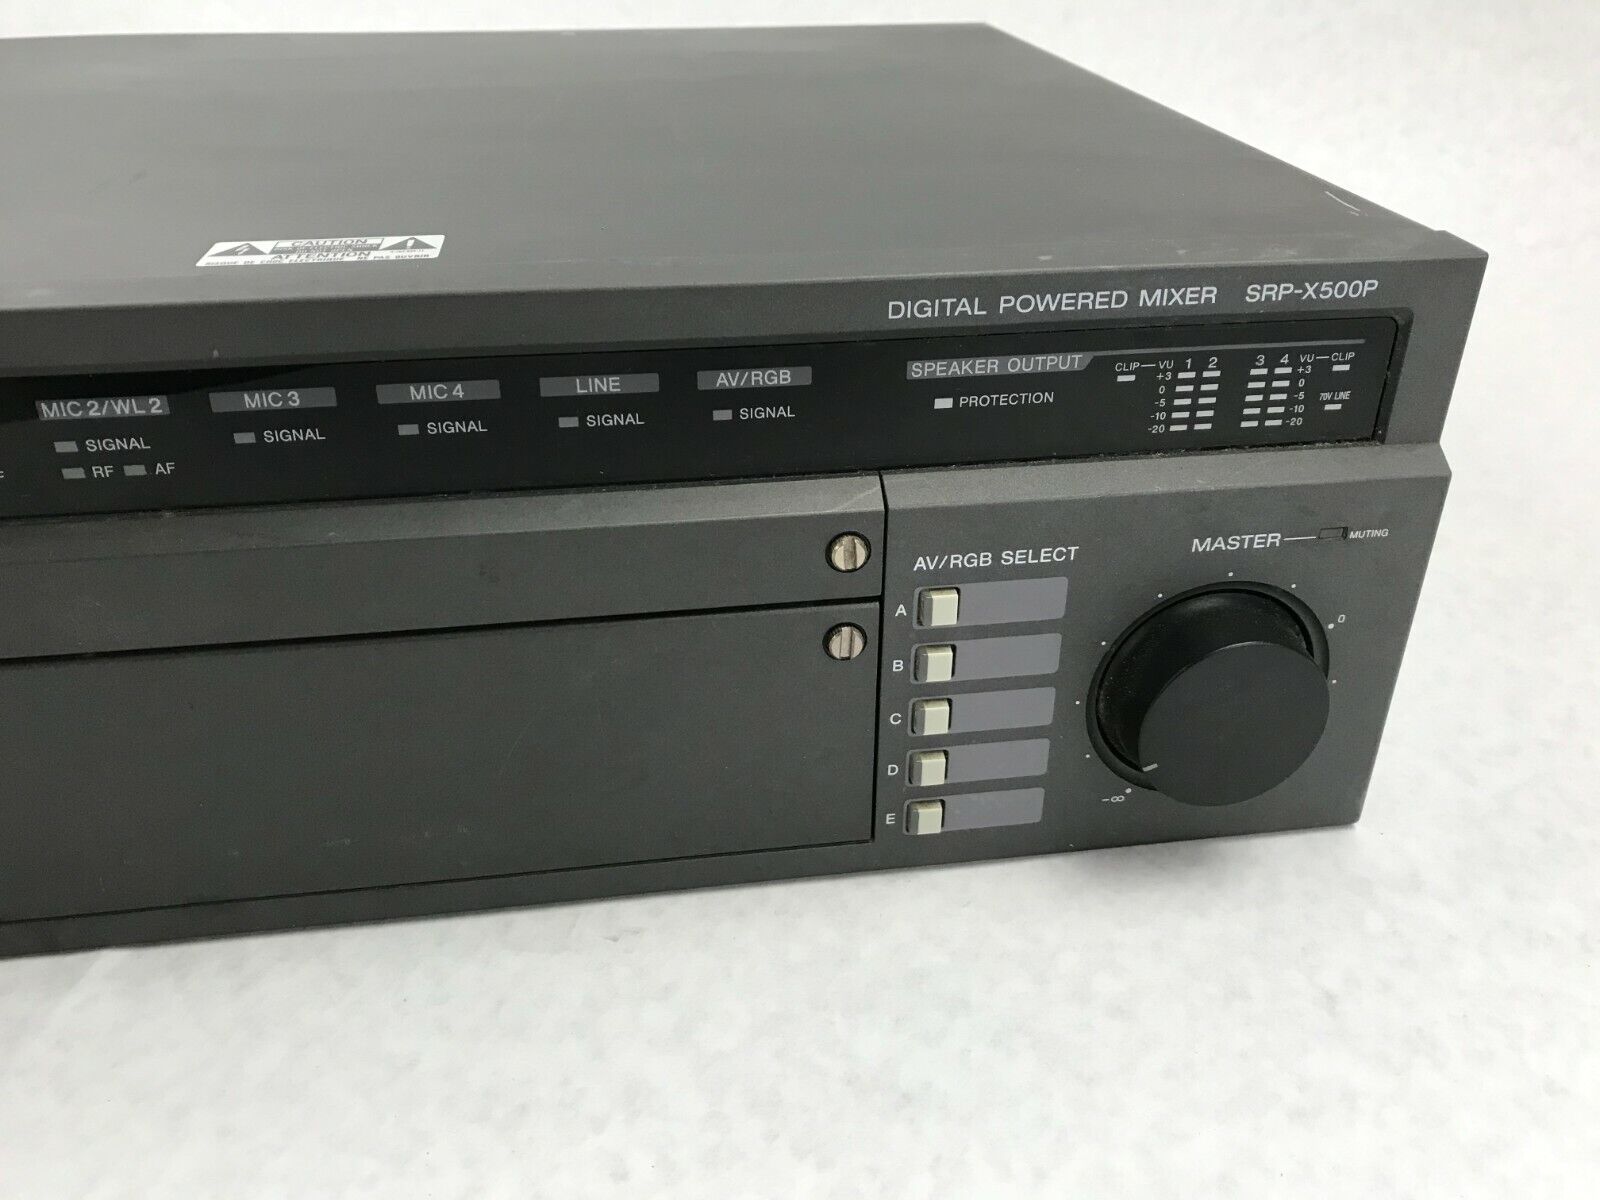 Sony SRP-X500P Digital Powered A/V Matrix Mixer